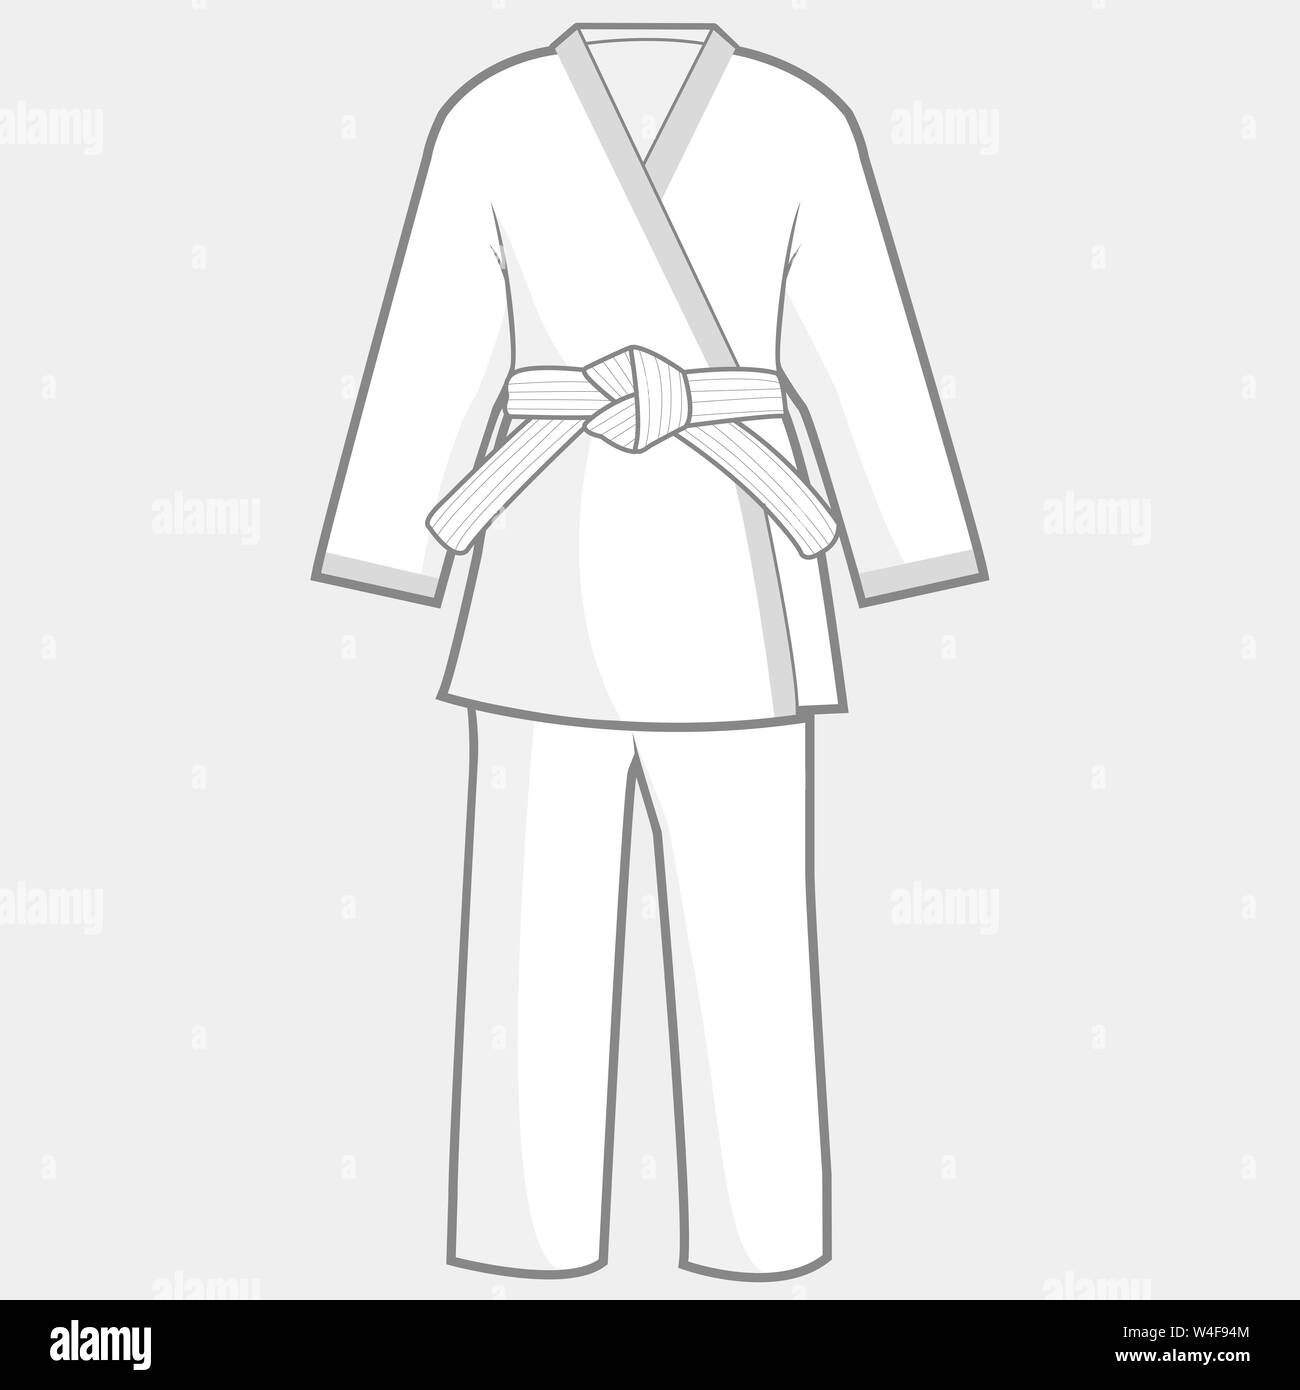 Illustration of martial arts uniform. Karate, Taekwondo, judo, jujitsu,  kickboxing, or kung fu suit Stock Photo - Alamy